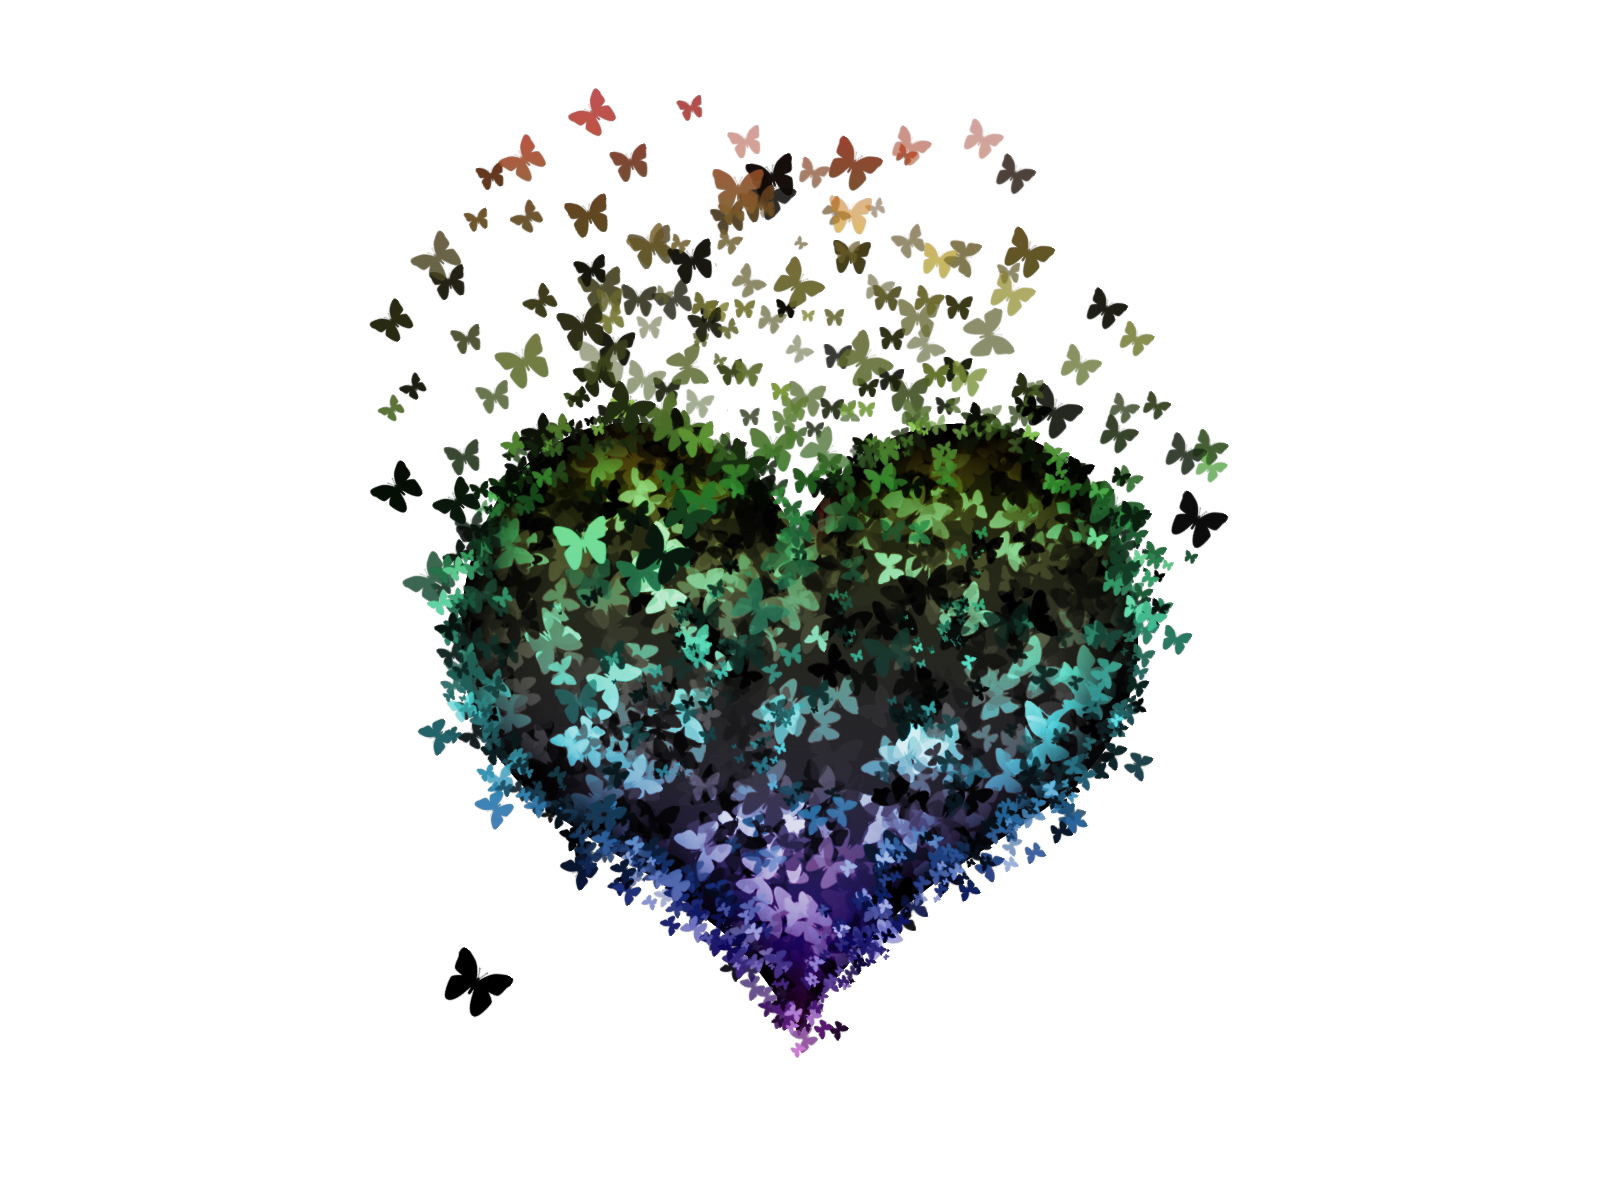 Dndm shape of my heart. Сердце из бабочек. Сердечко из бабочек. Сердечко из бабочек на стену. Бабочки в виде сердца.